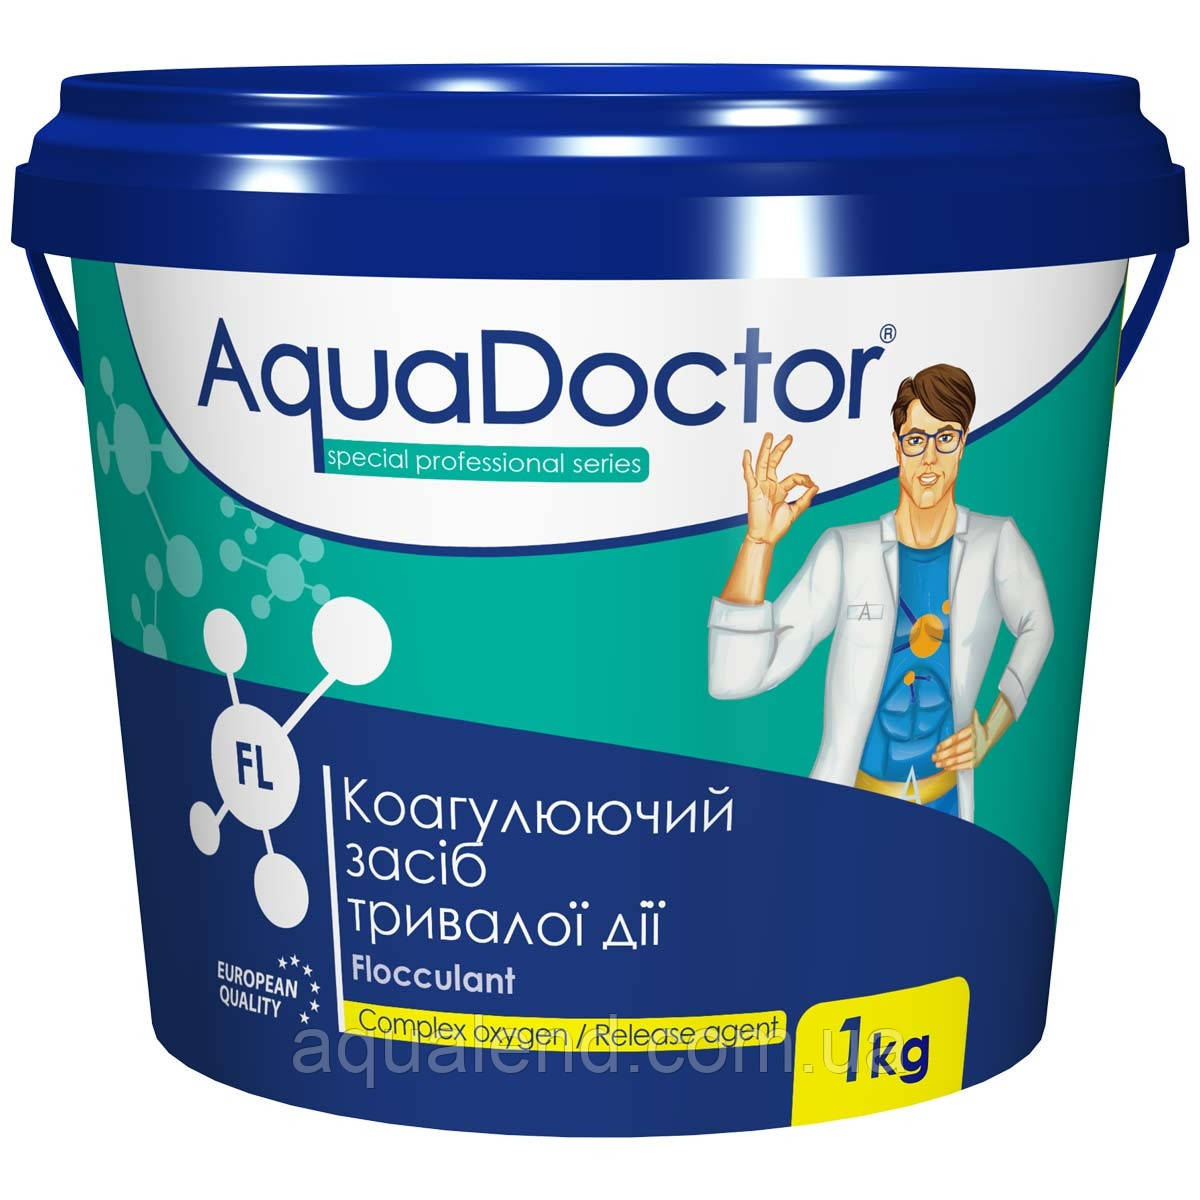 AquaDoctor Коагулюючу засіб у гранулах AquaDoctor FL-1 кг.